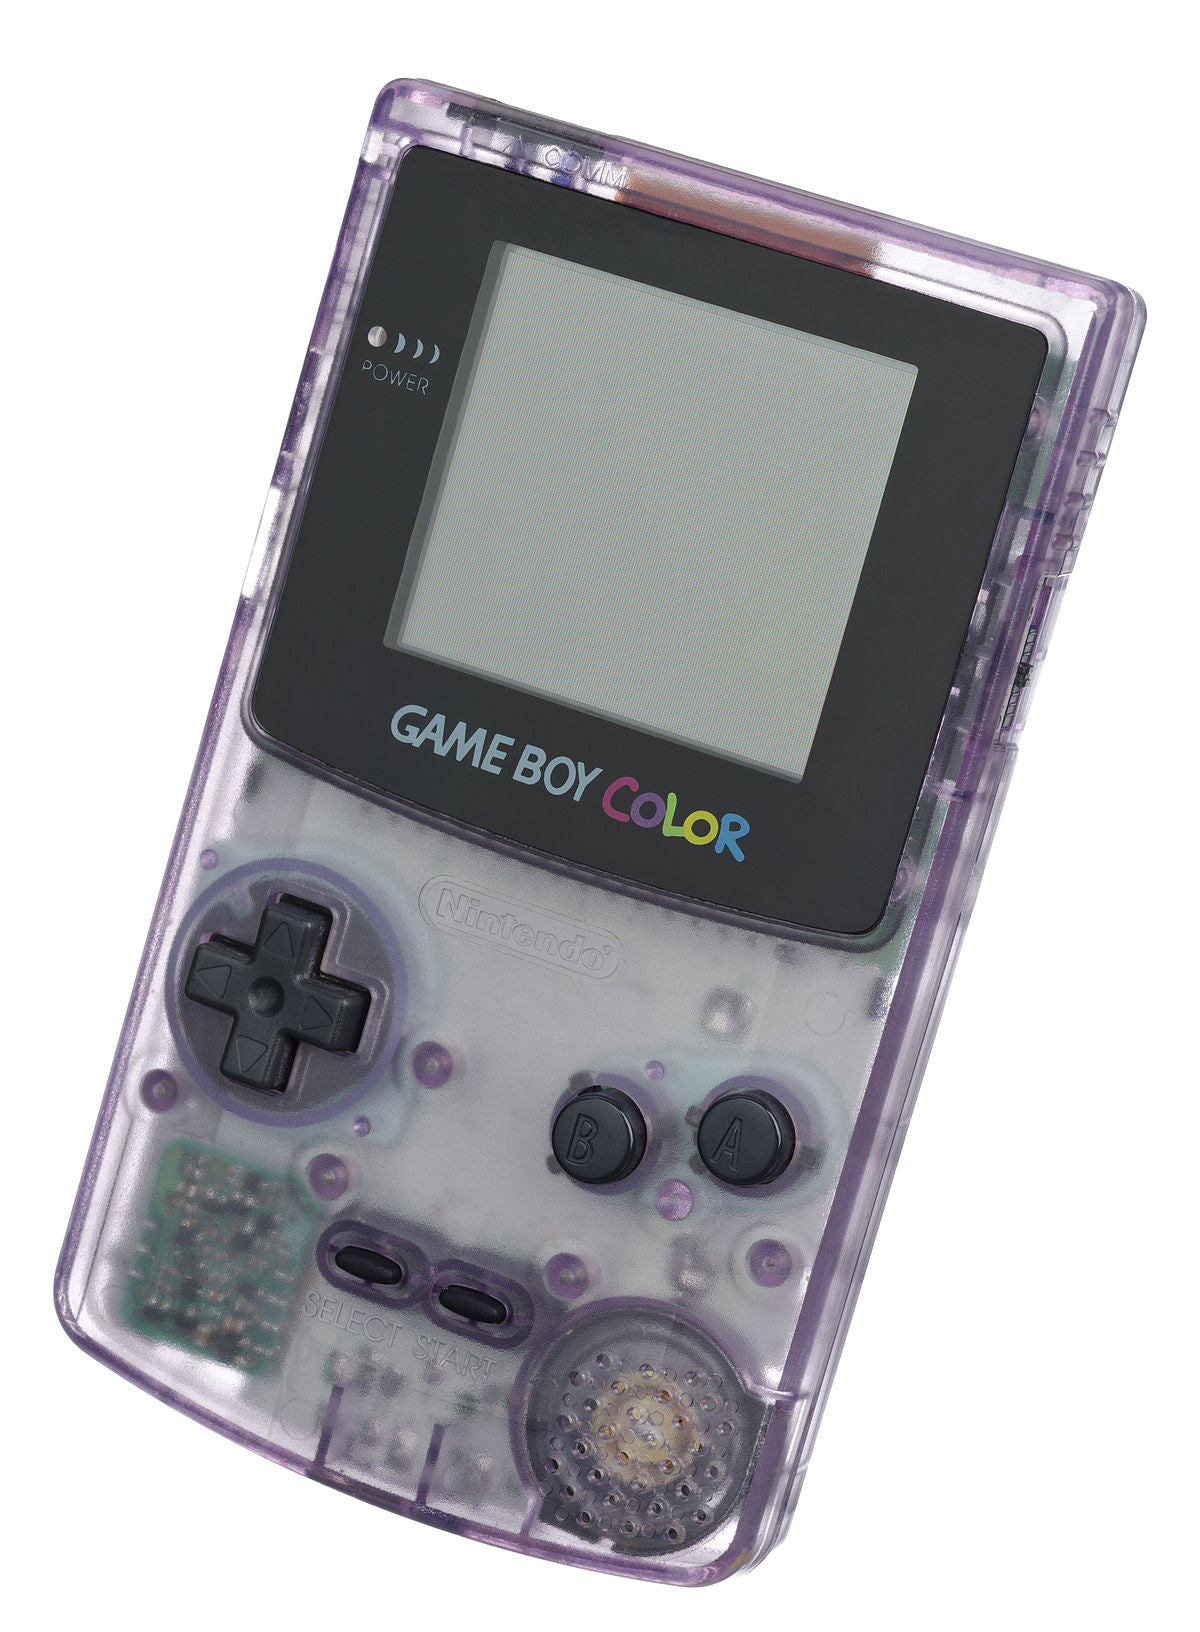 Nintendo Game Boy Color Retropixl Retrogaming retro gaming Rare Console Collector Limited Edition Japan Import